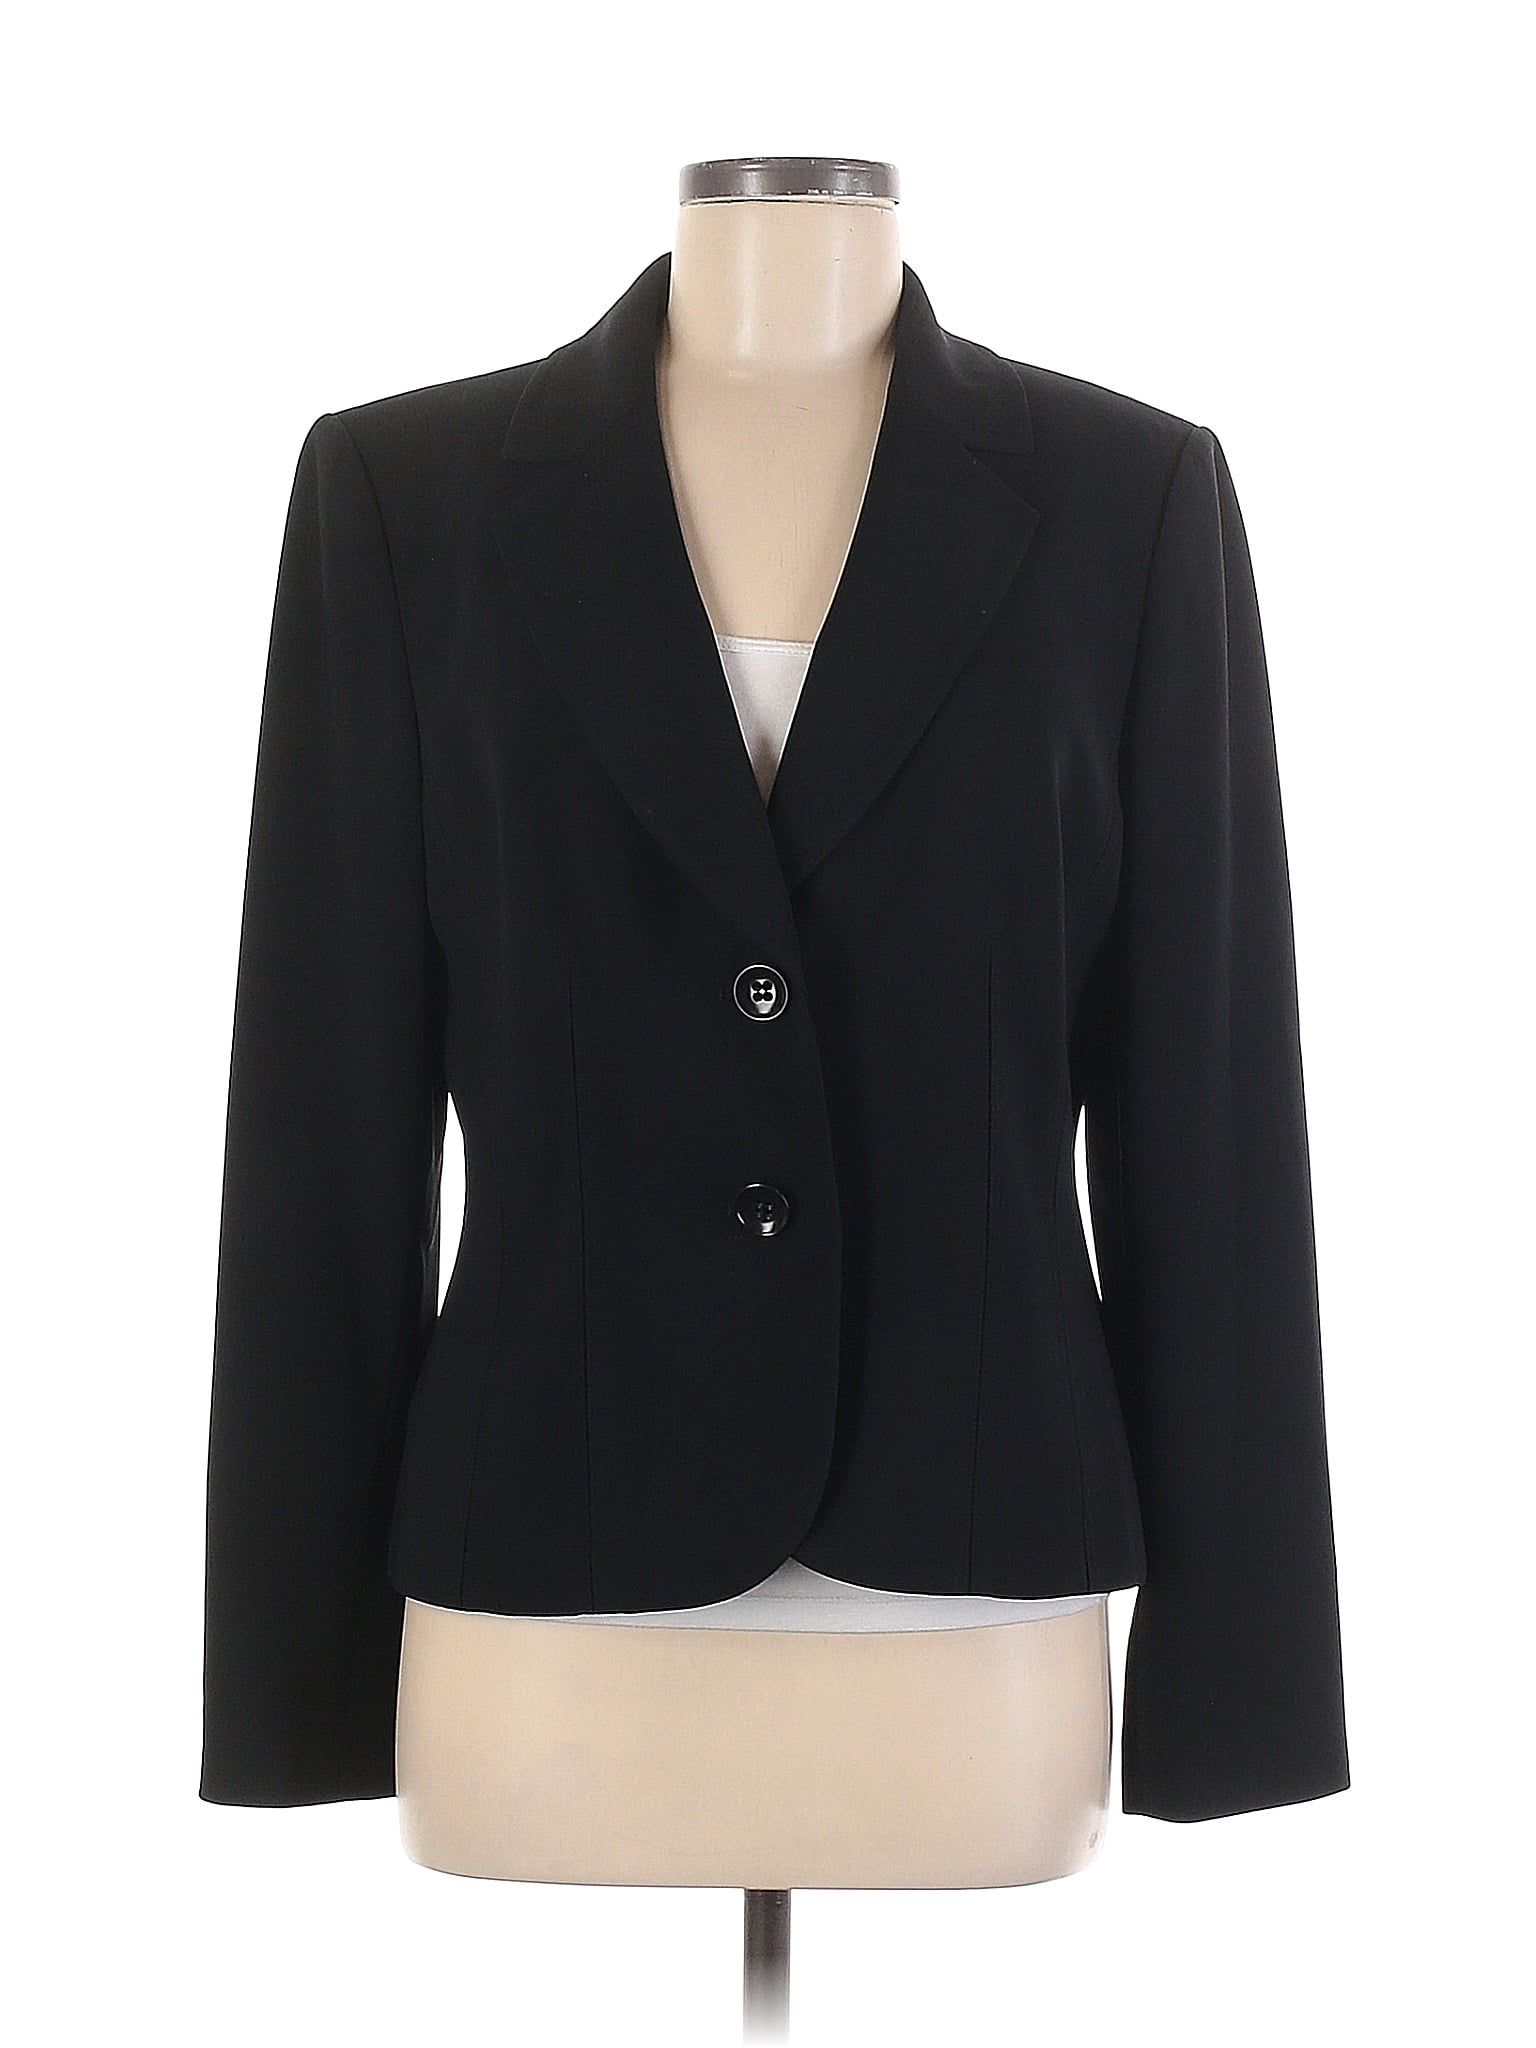 Ann Taylor Solid Black Blazer Size 8 - 80% off | thredUP